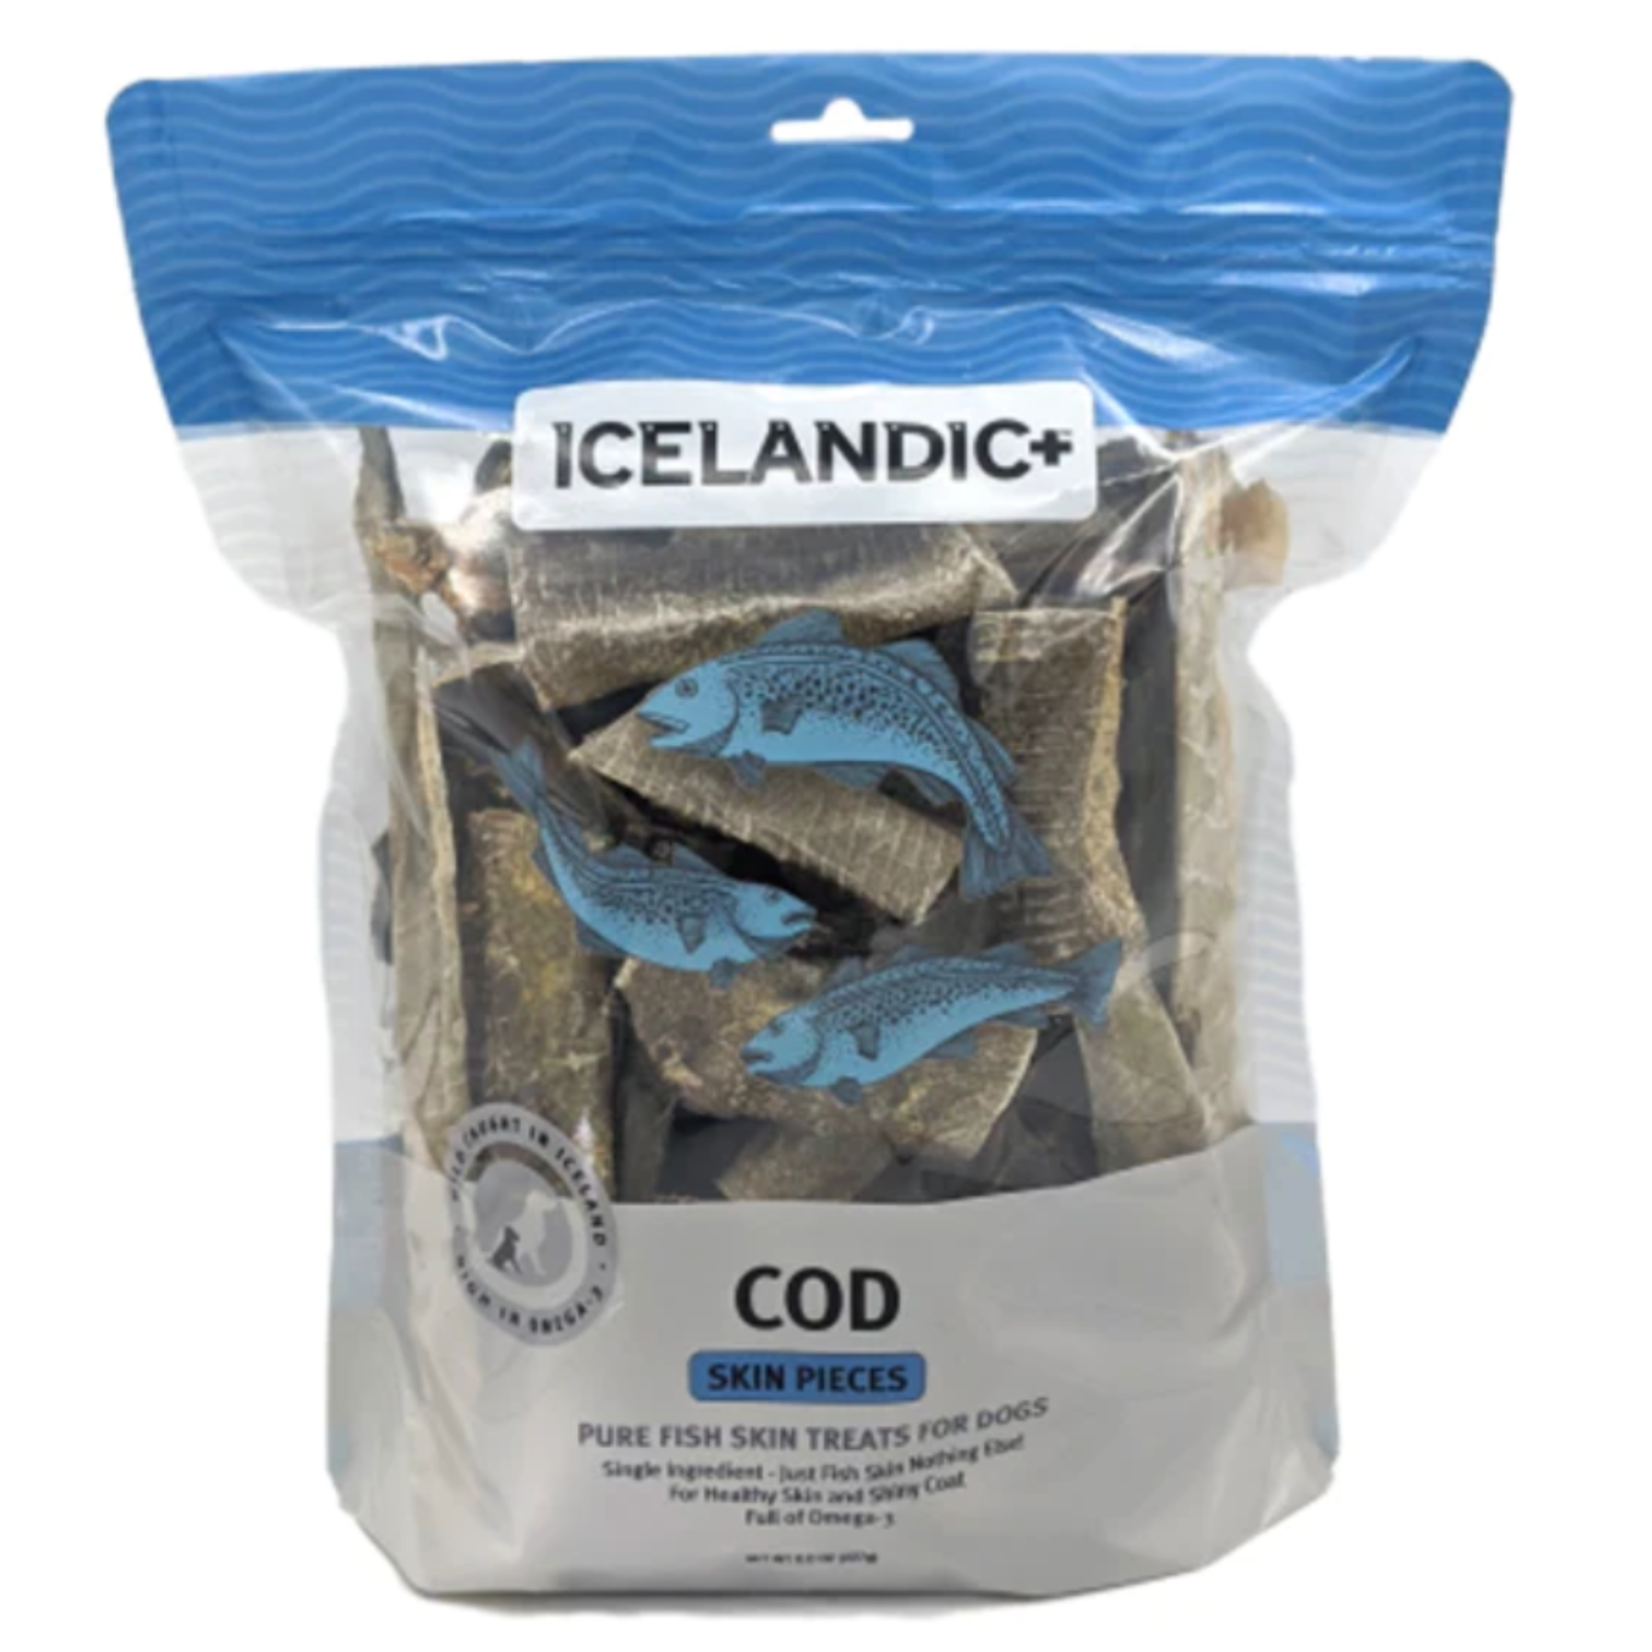 Icelandic+ Icelandic+ Cod Skin Pieces 227g